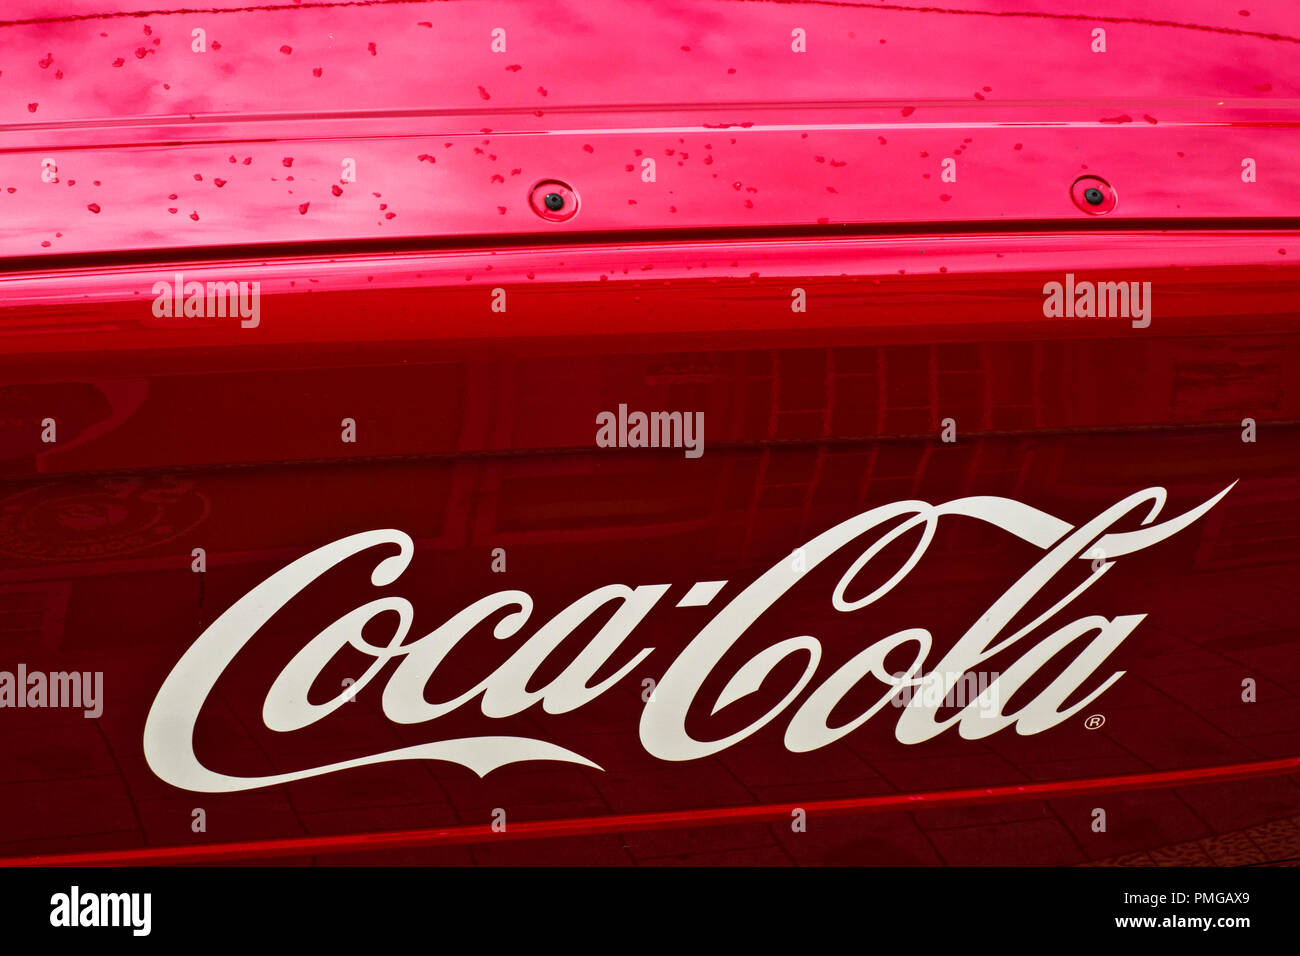 Coca Cola red delivery truck Stock Photo